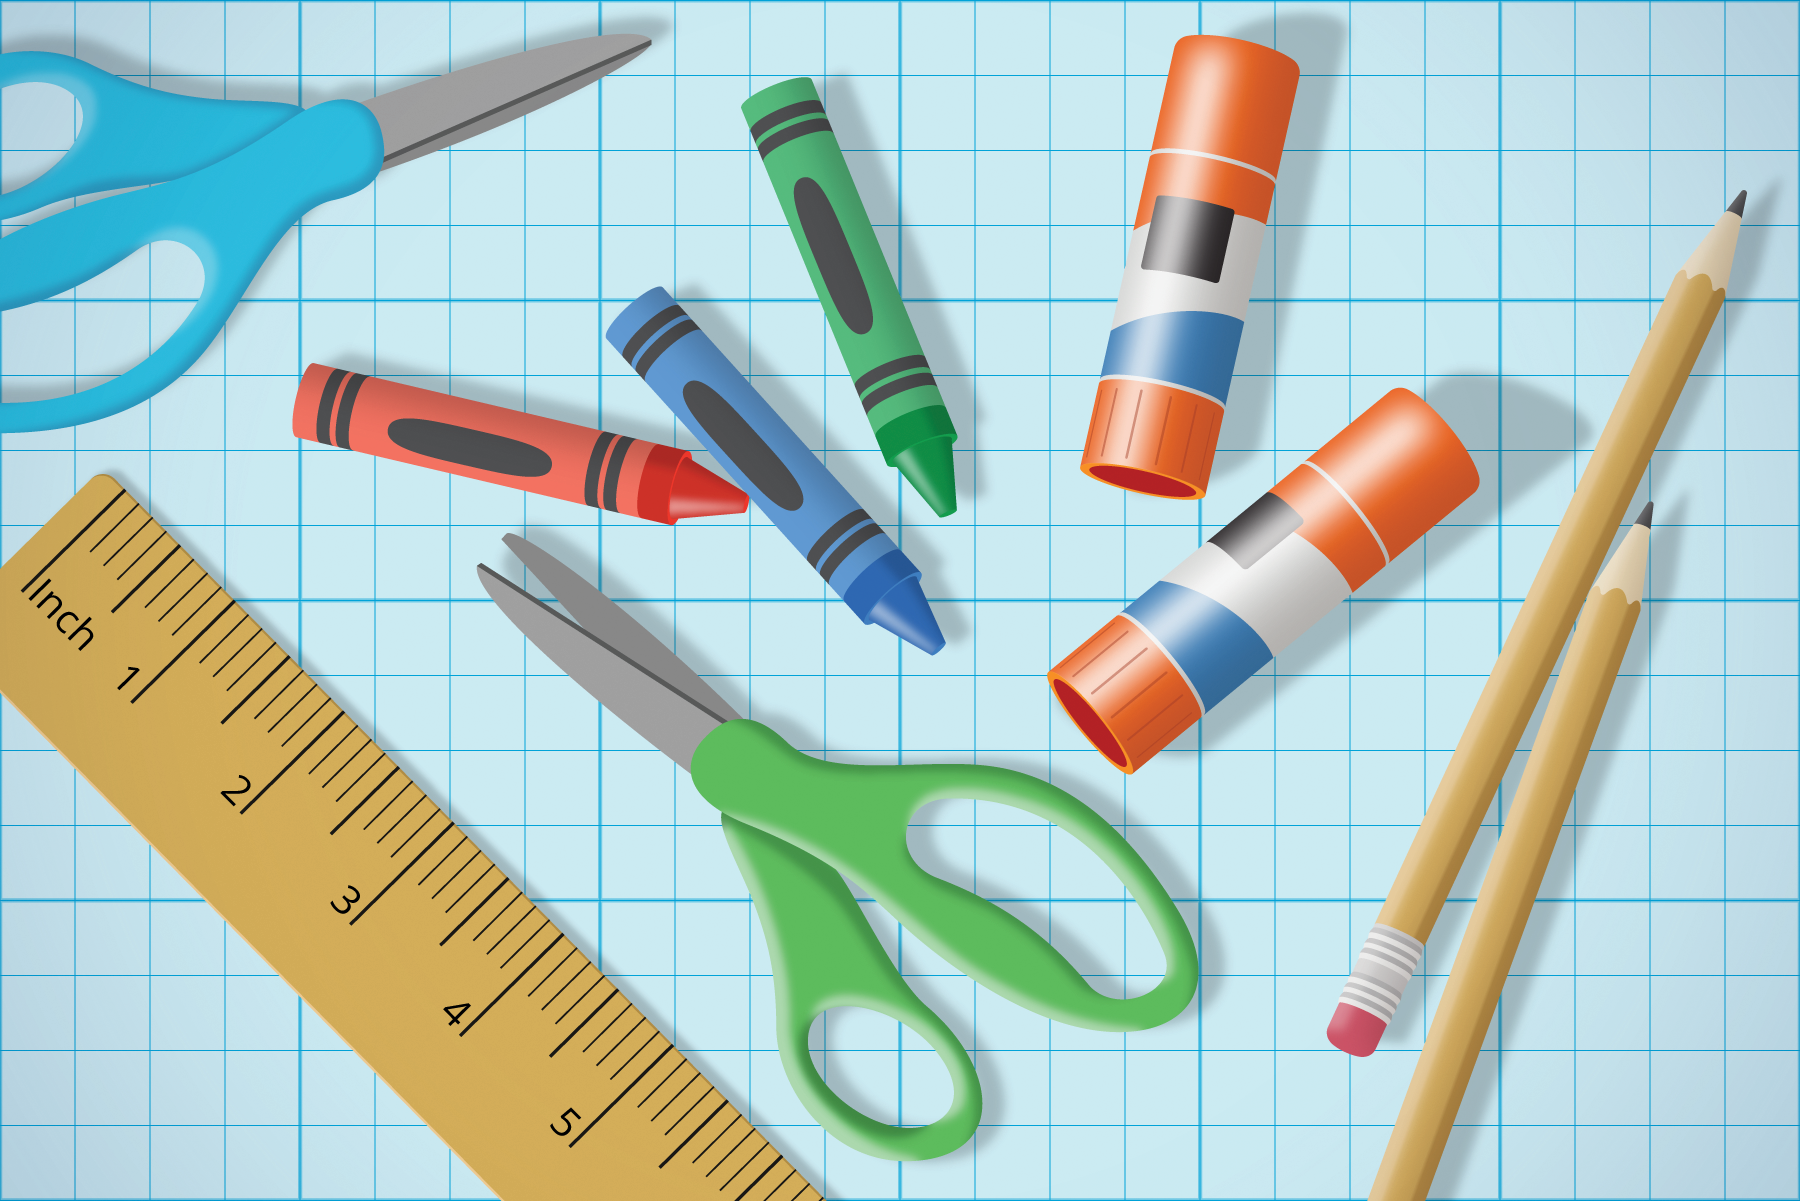 glue sticks, crayons, and pencils